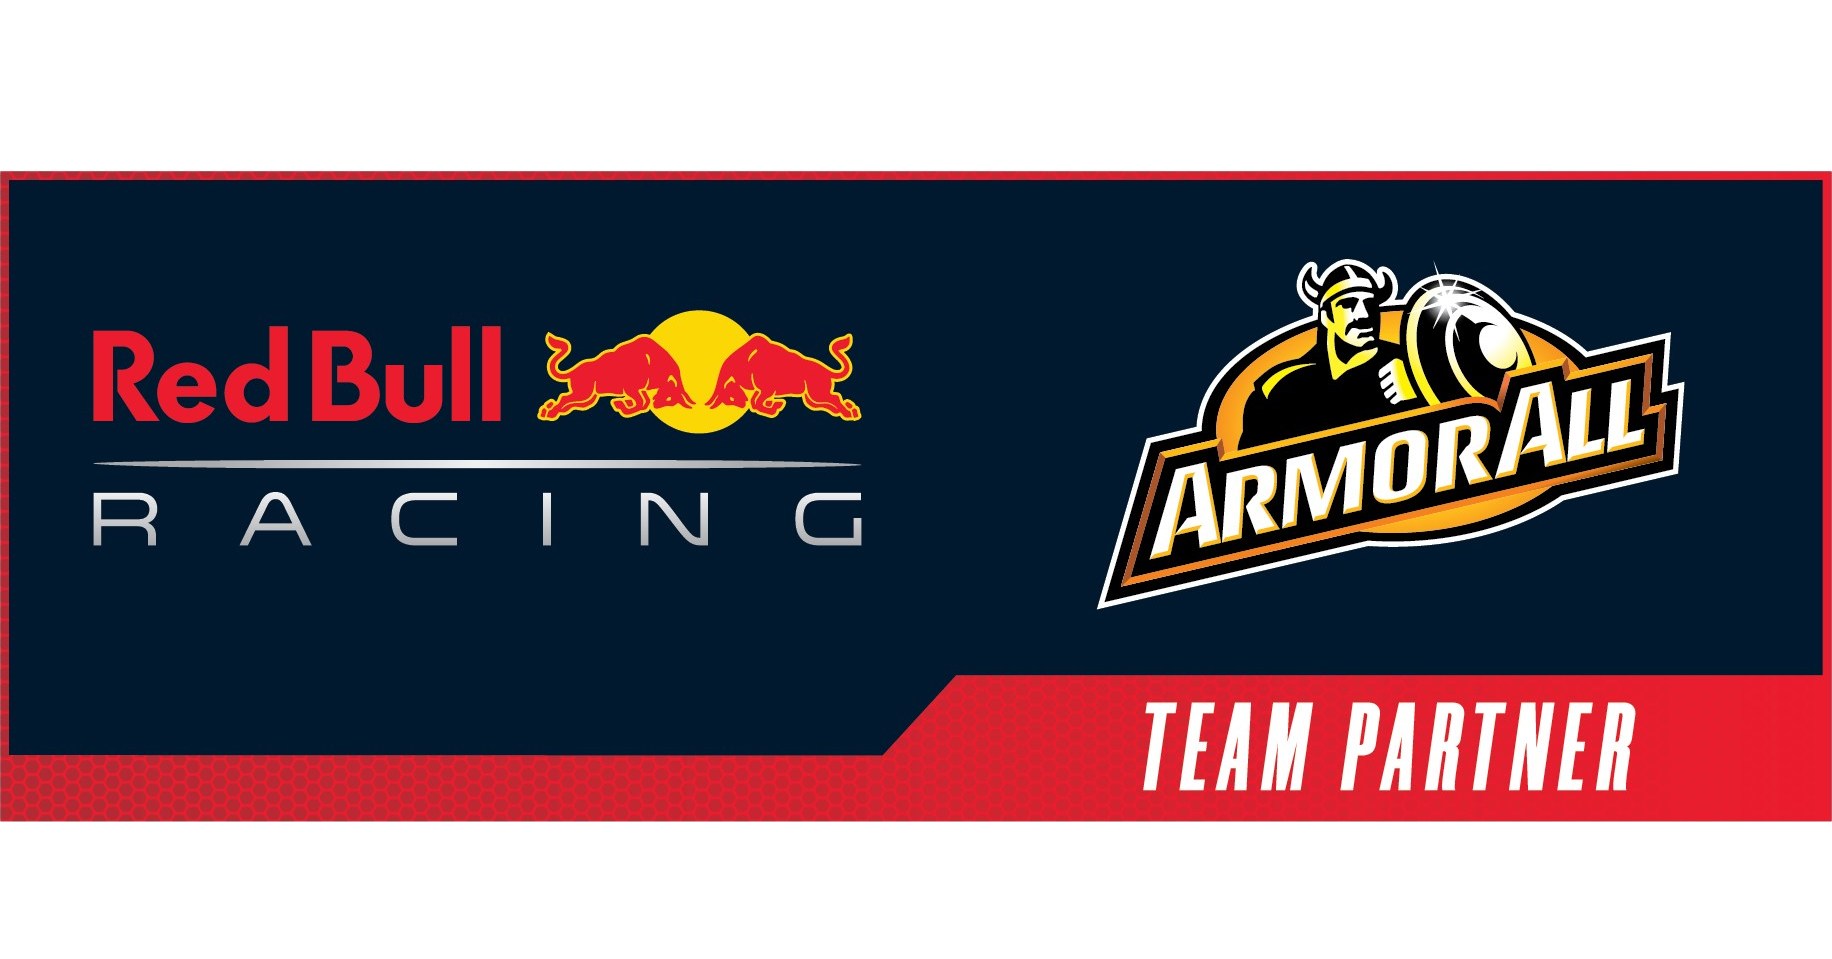 Armor All Announces Global Partnership With Red Bull Racing Honda